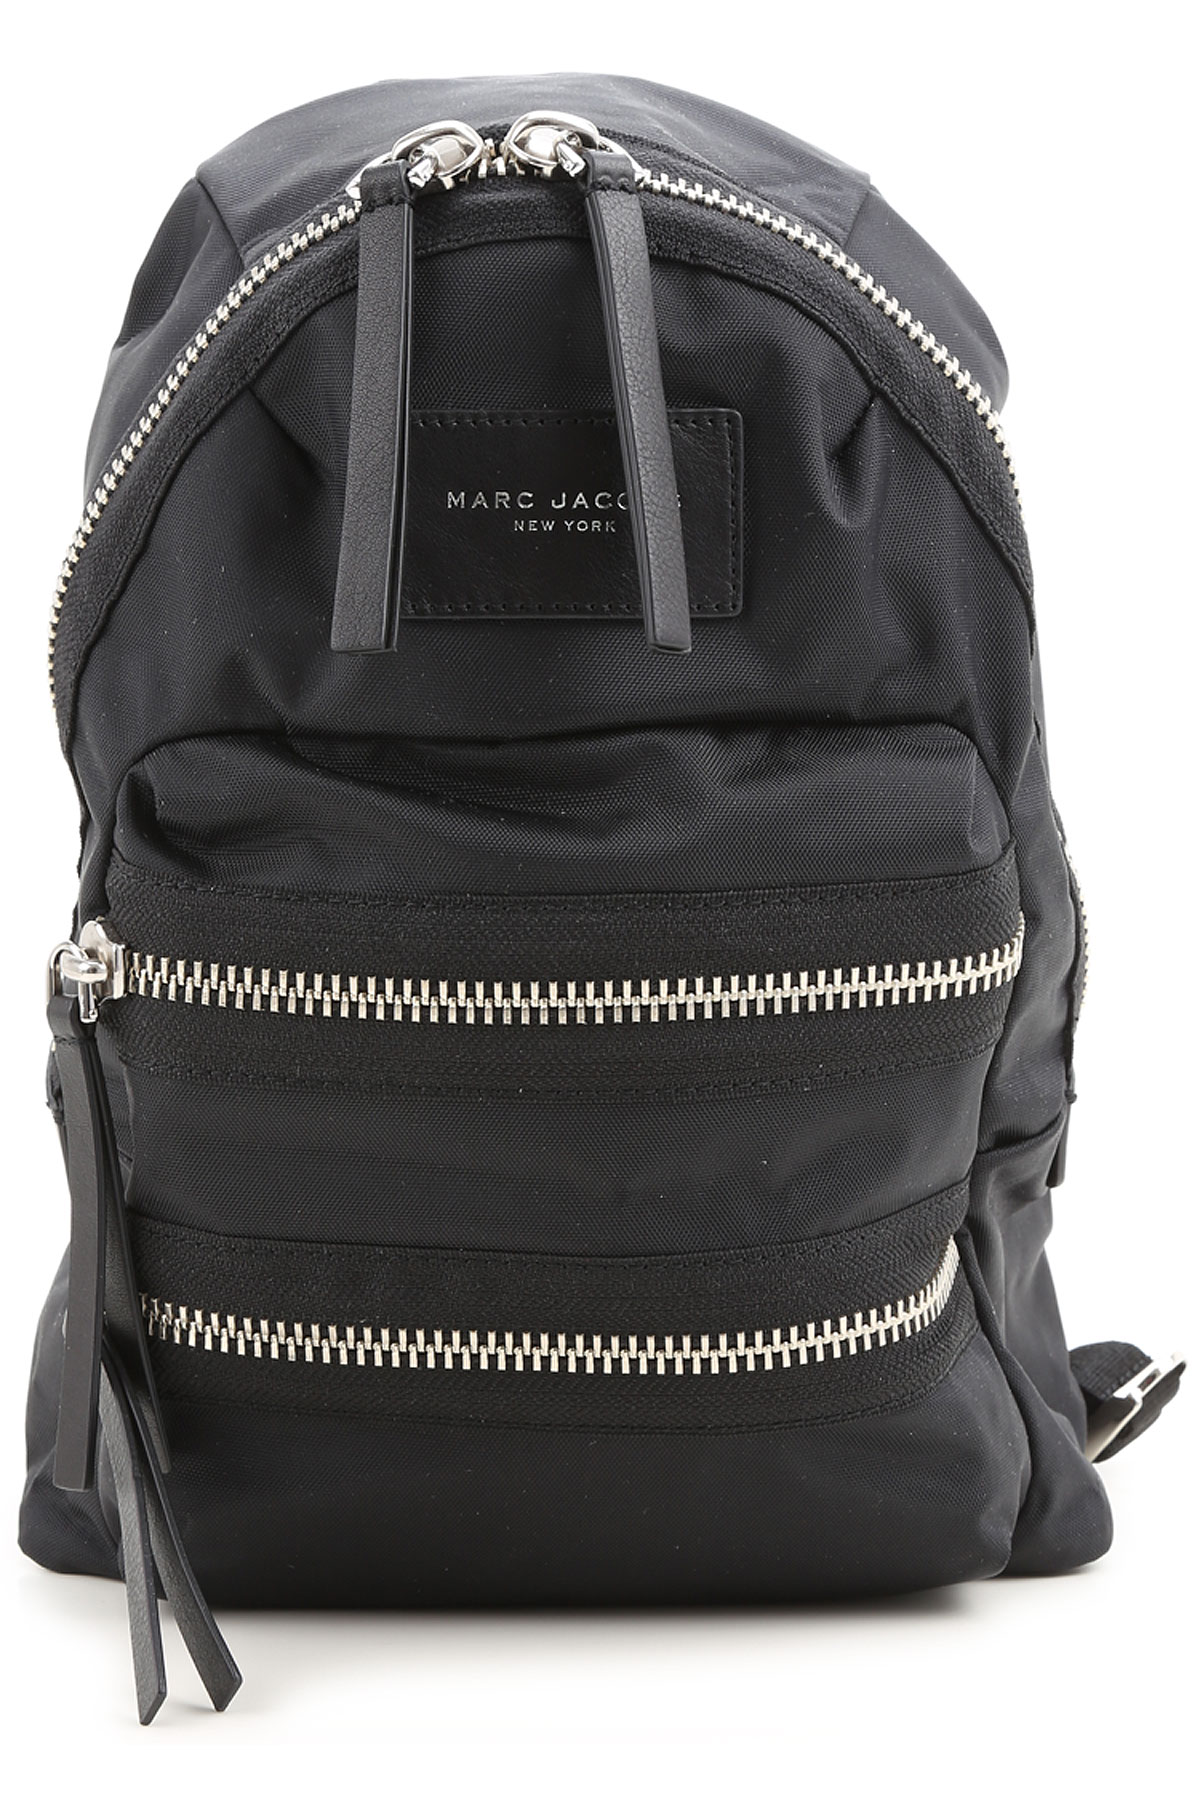 Handbags Marc Jacobs, Style code: m0008298-001-a266